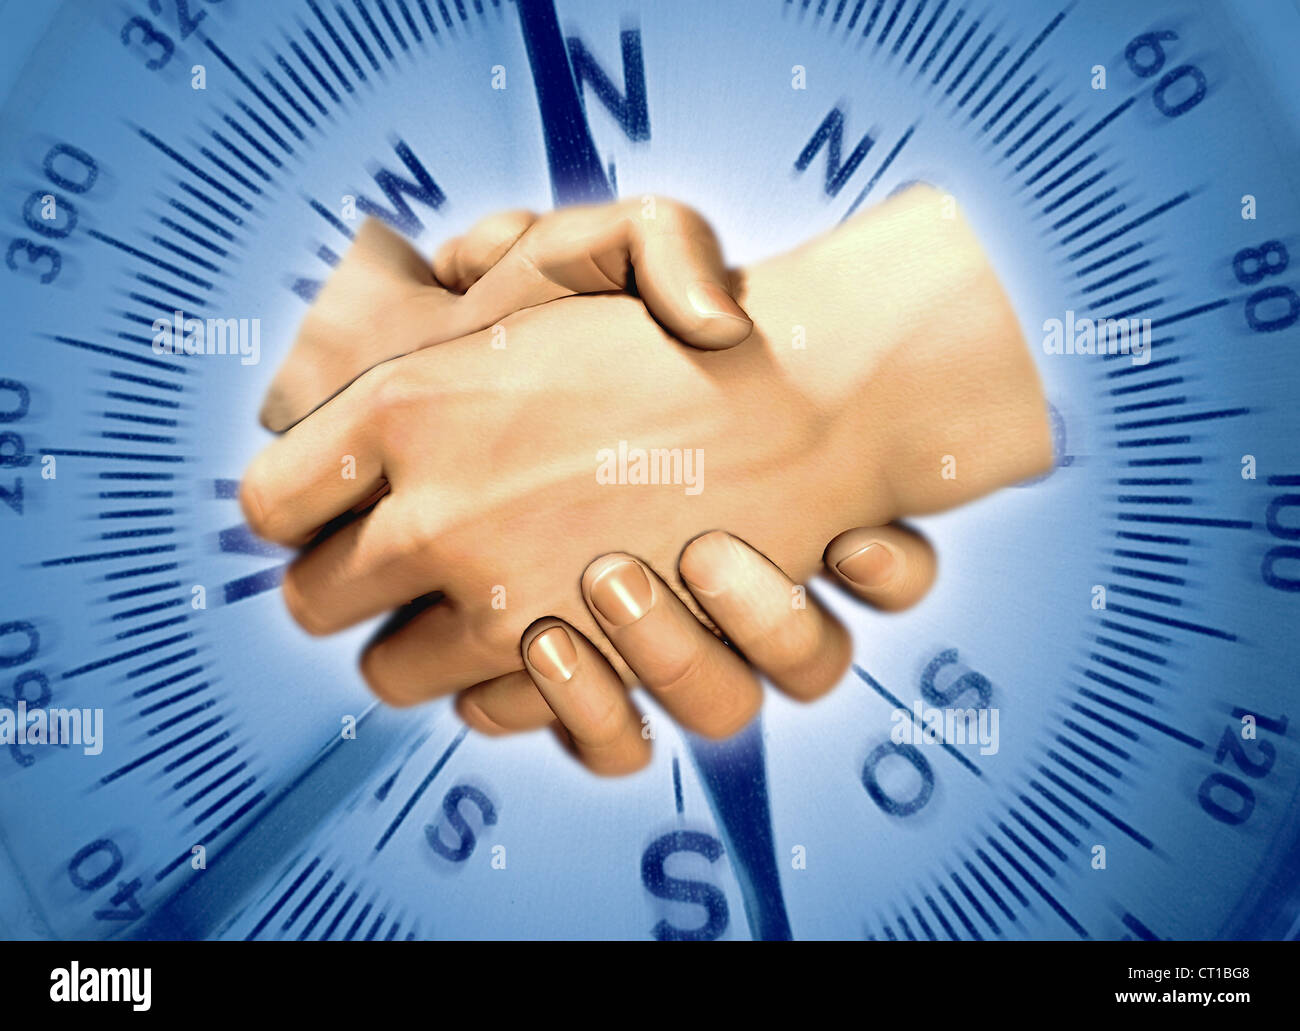 Agitar las manos en frente de una escala de brújula - 2 Hände reichen sich die mano im Hintergrund vor einem Kompass Foto de stock